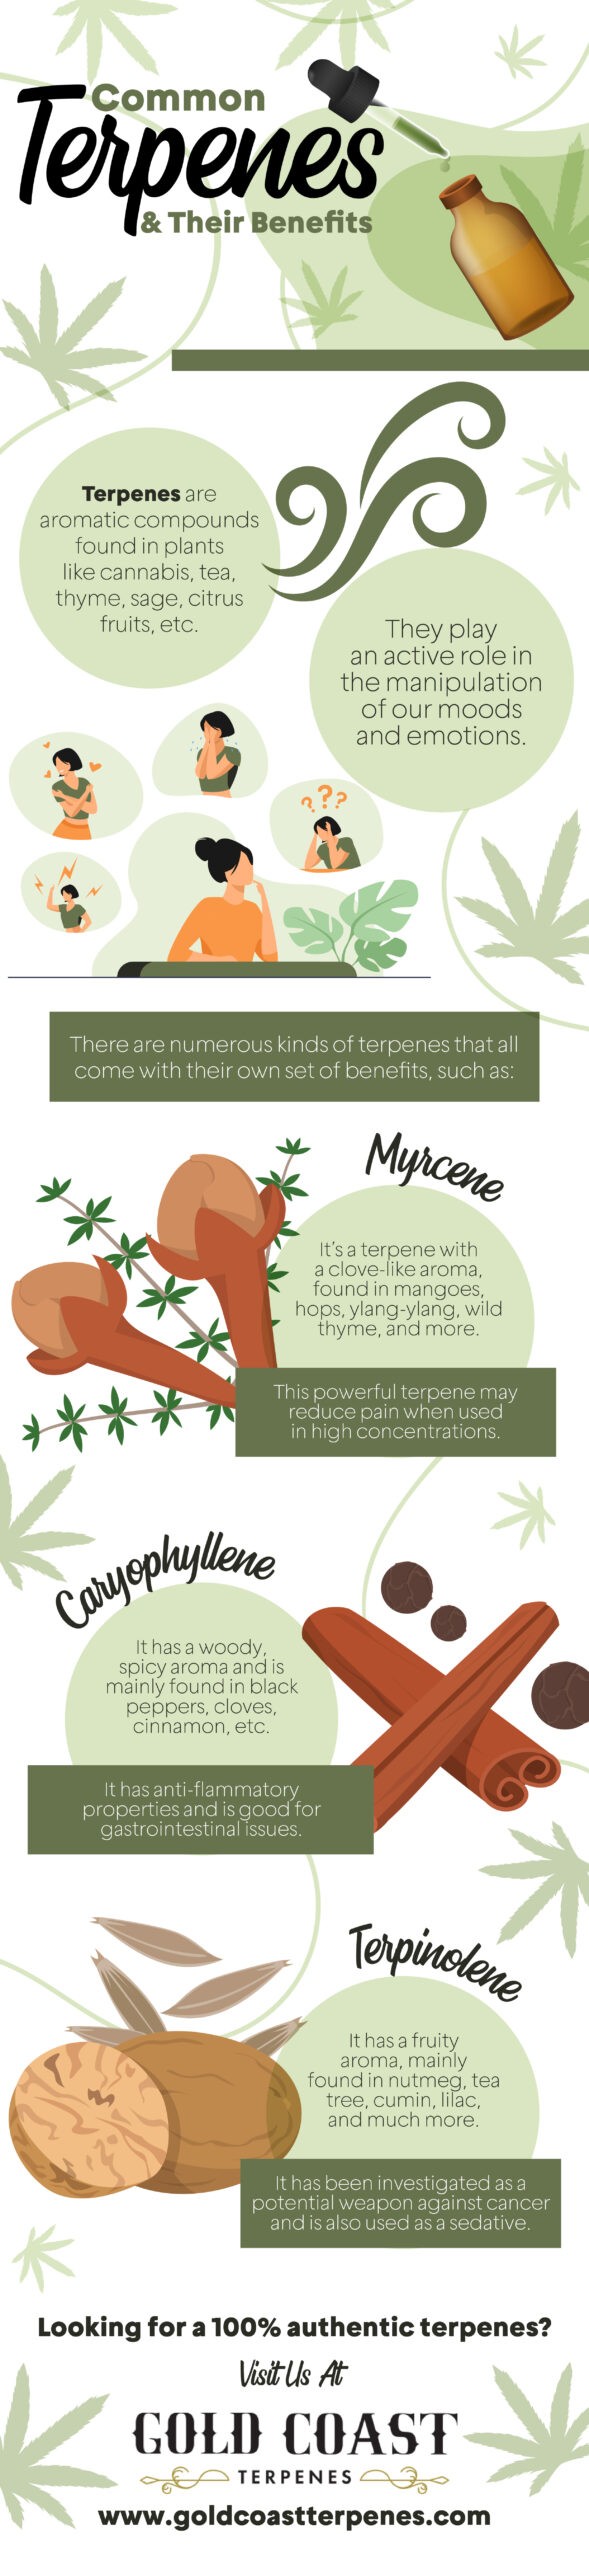 Common Terpenes & Their Benefits